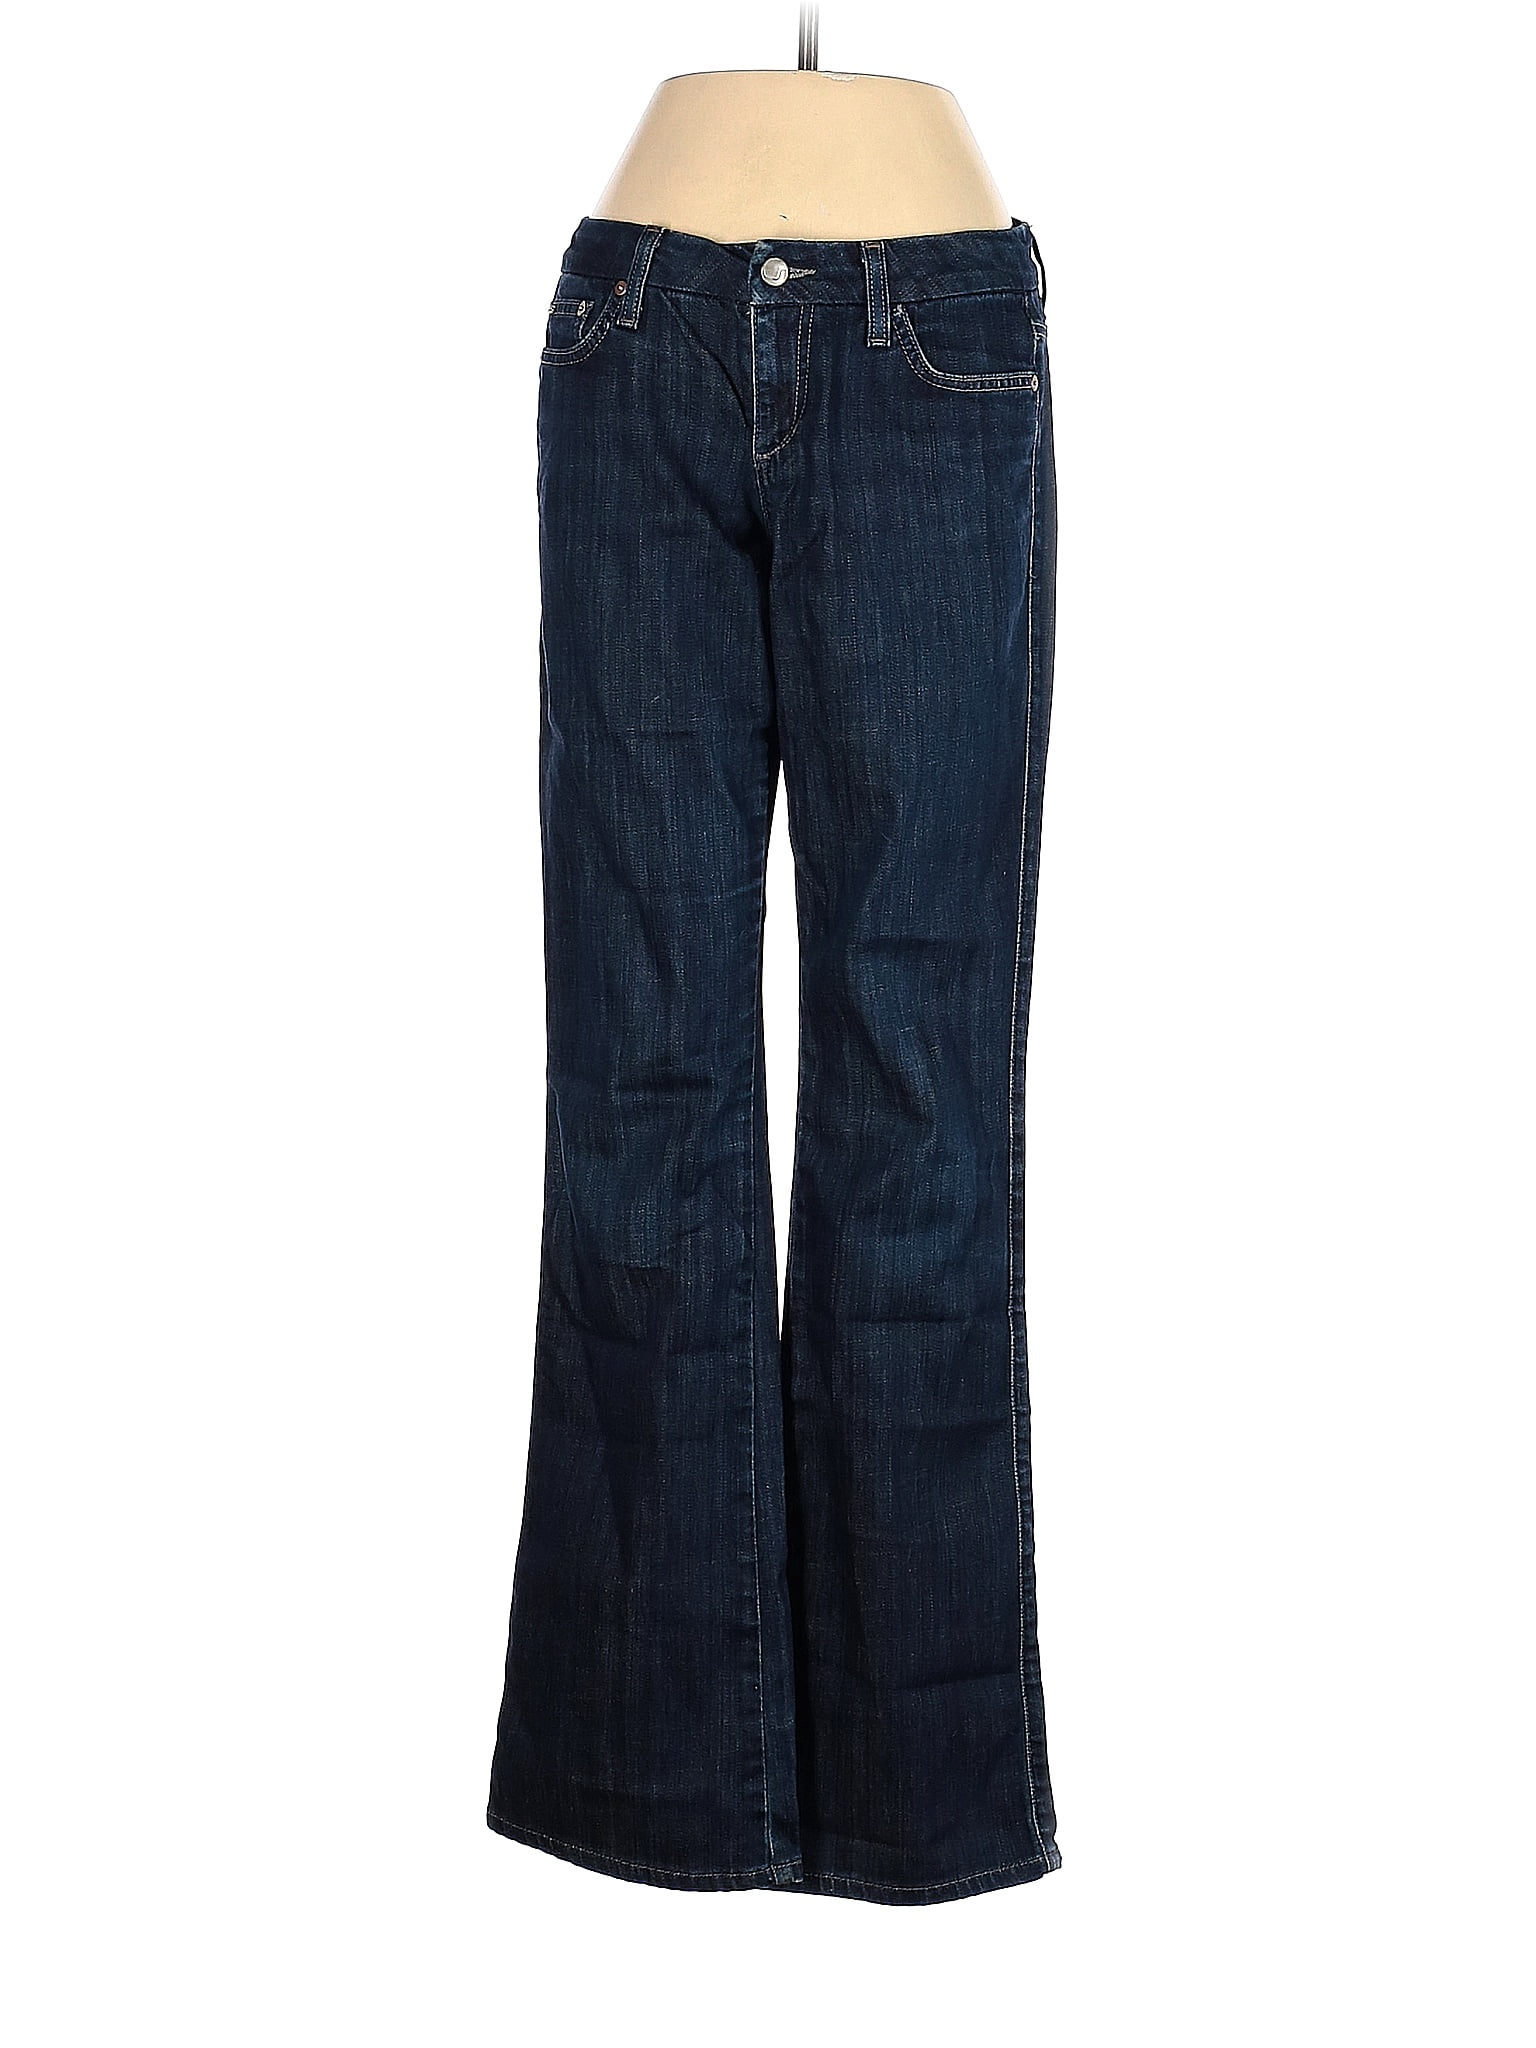 Joe's Jeans Solid Blue Jeans 26 Waist - 77% off | ThredUp